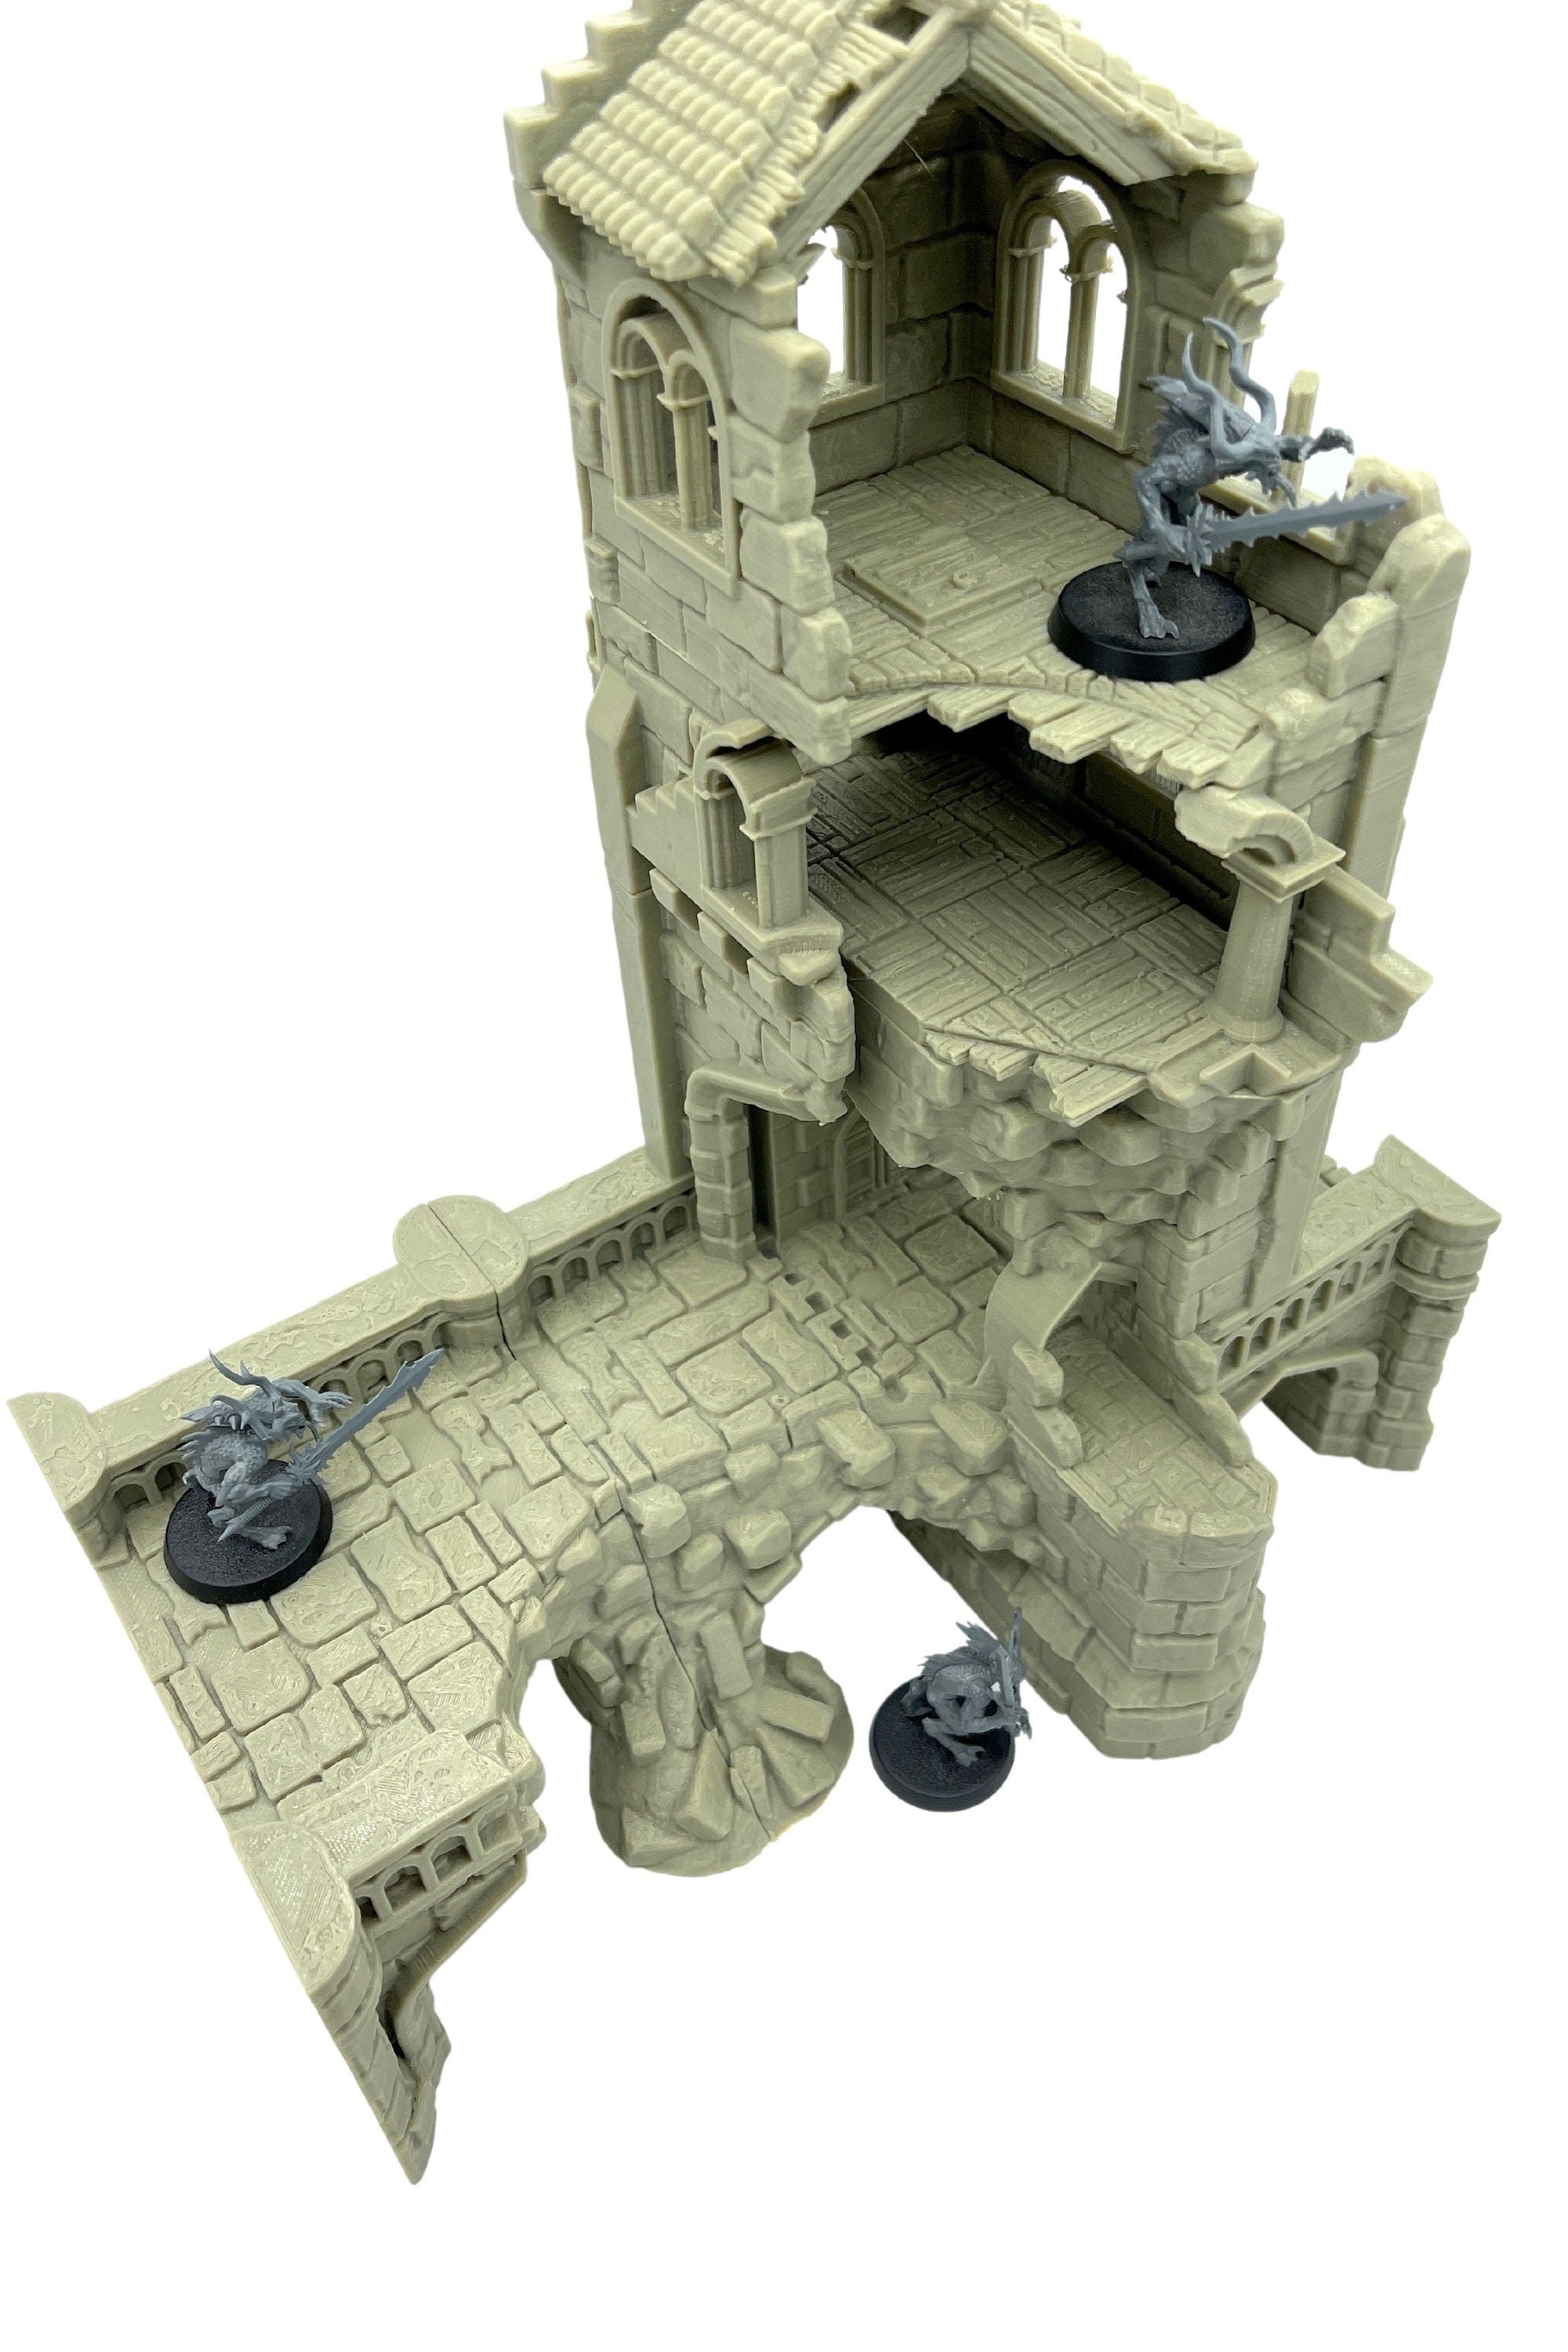 Arkenfel Modular Ruined Bridge GateHouse / Dark Realms Terrain / RPG and Wargame 3d Printed Tabletop Terrain / Licensed Printer